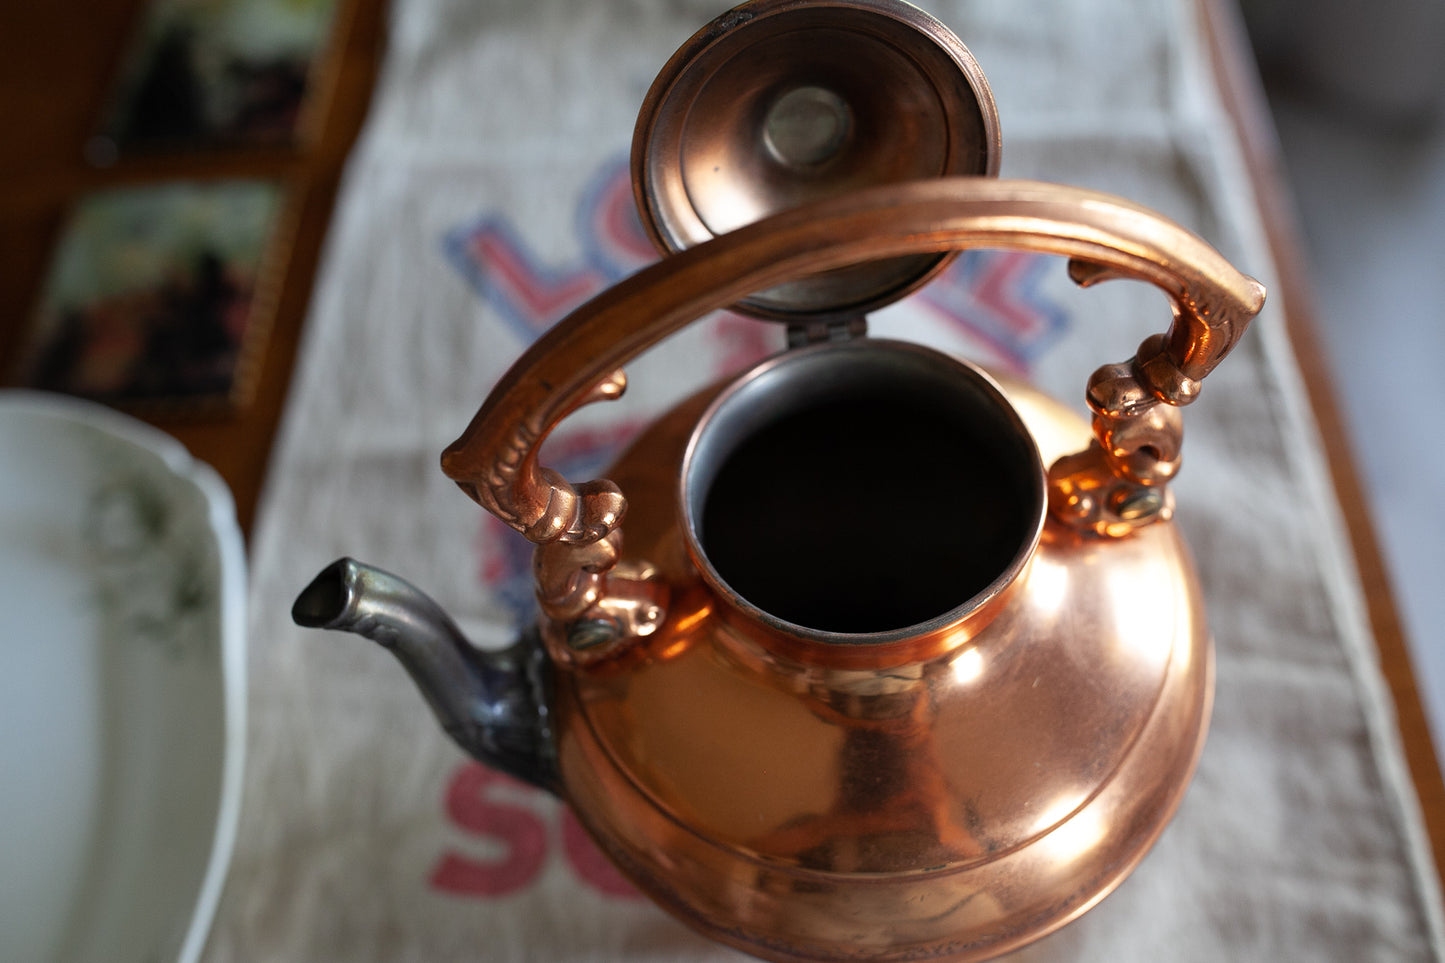 Vintage Teapot - Copper, Silver, and Gold Teapot